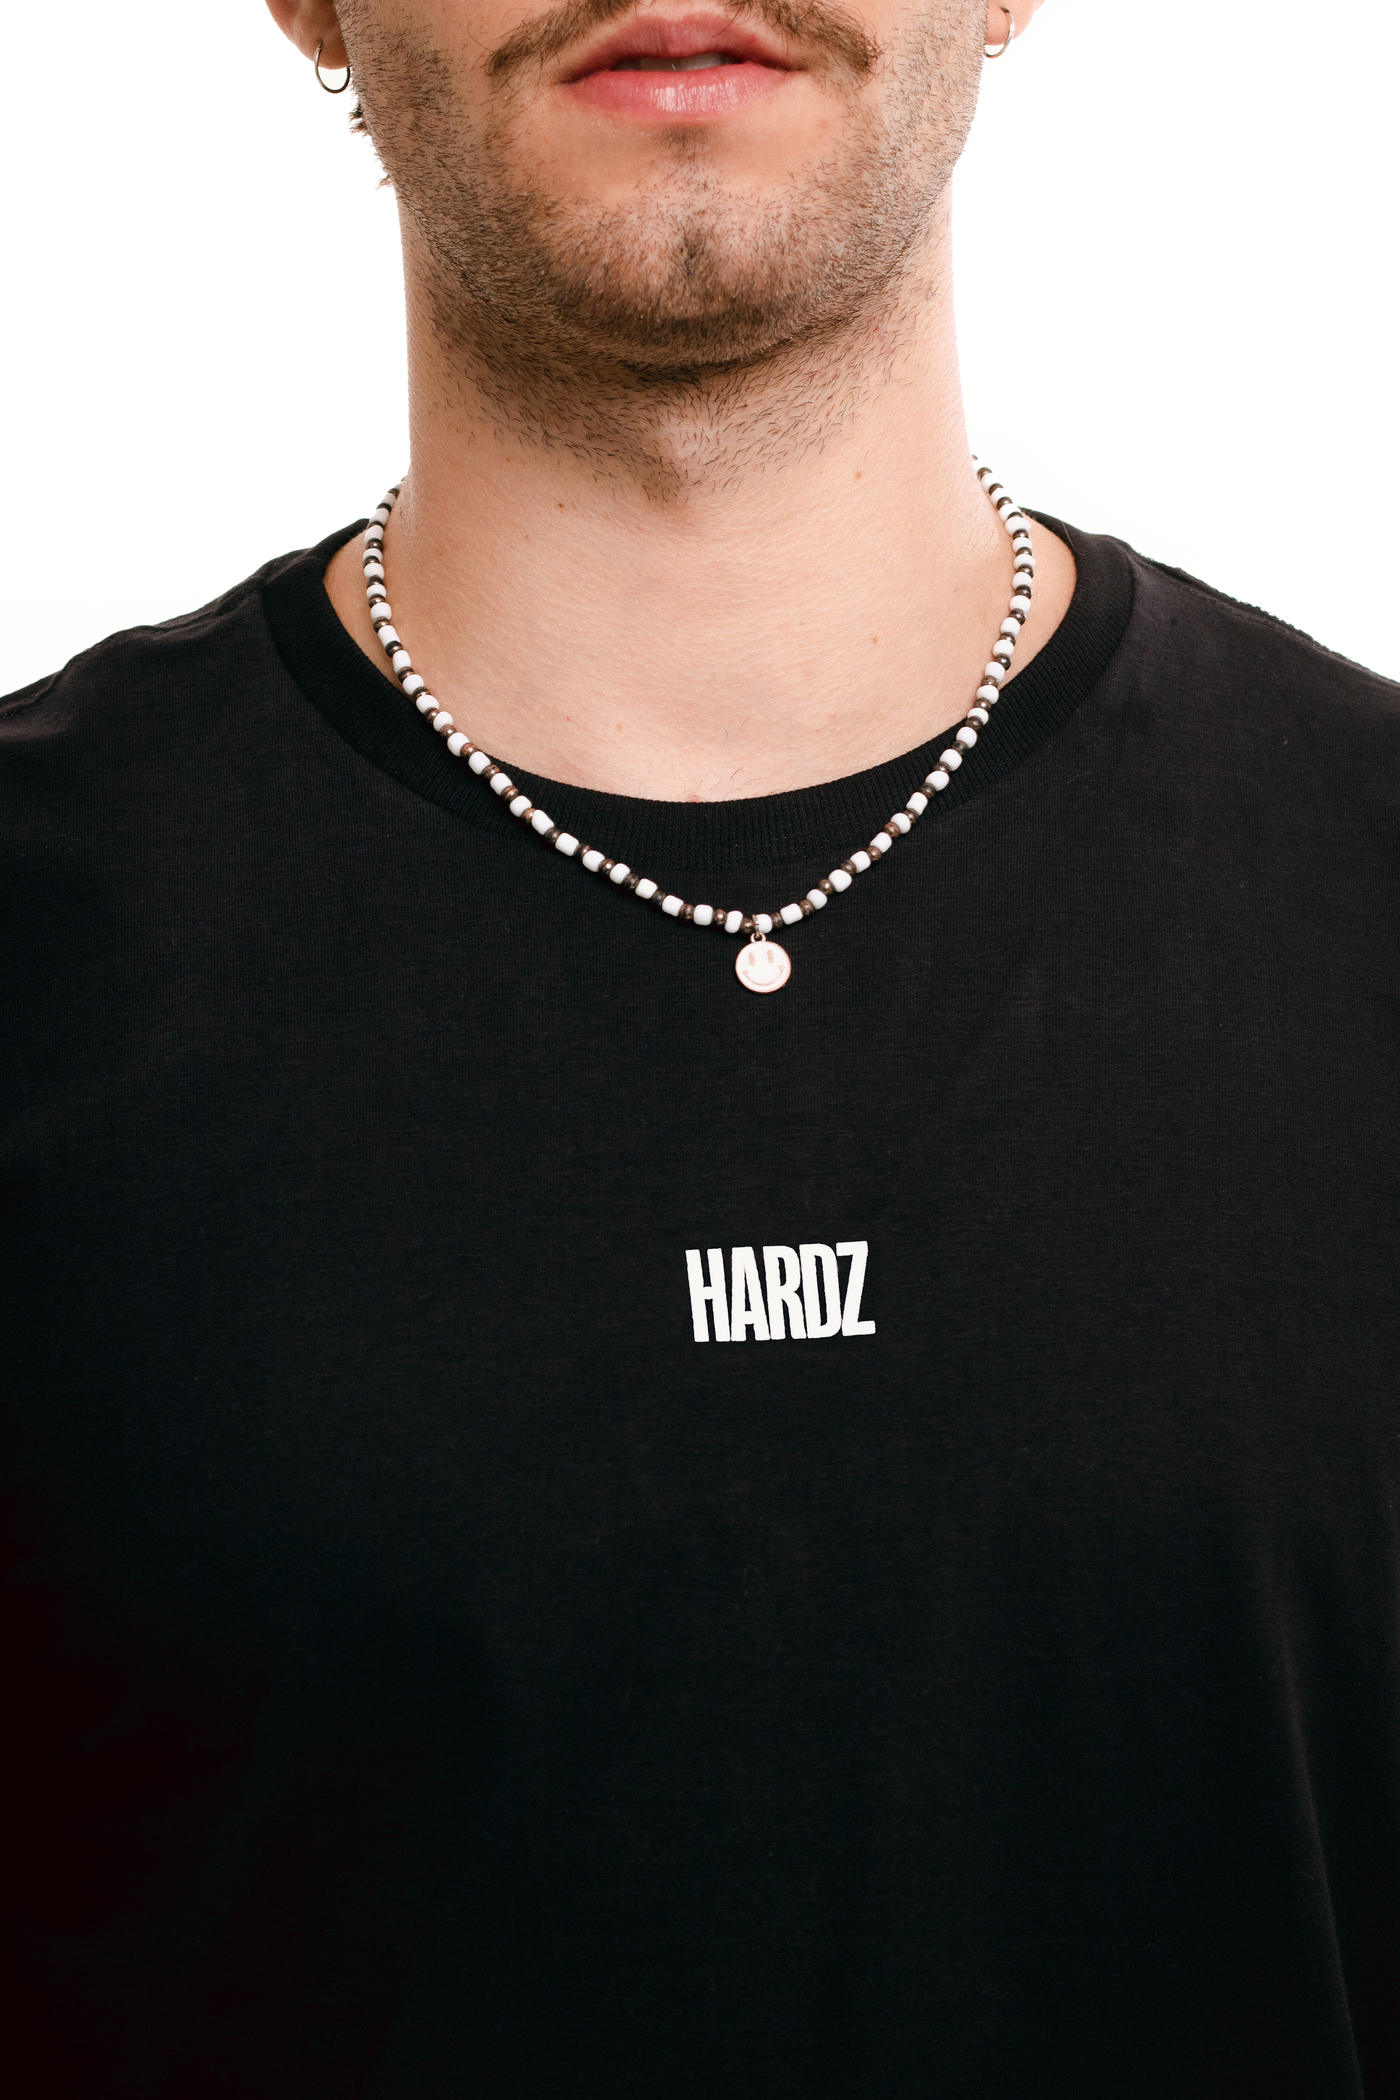 Camiseta Logo Hardz